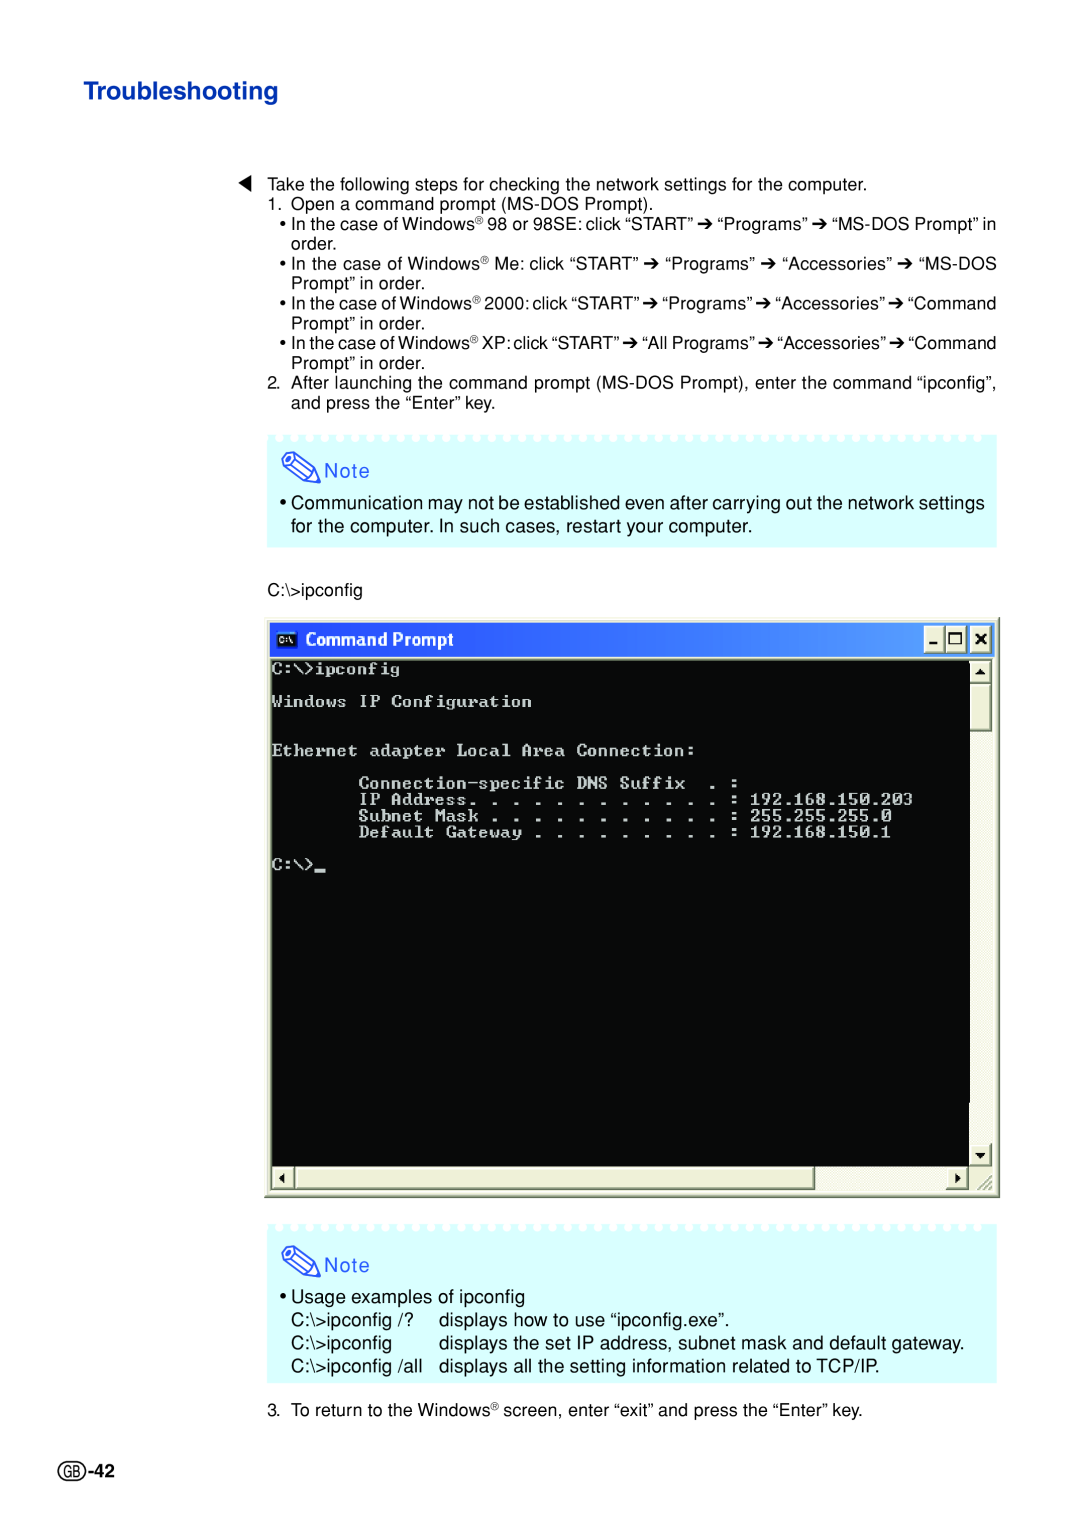 Sharp XG-C430X, XG-C335X Troubleshooting, Usage examples of ipconfig, C\ipconfig /? displays how to use “ipconfig.exe” 